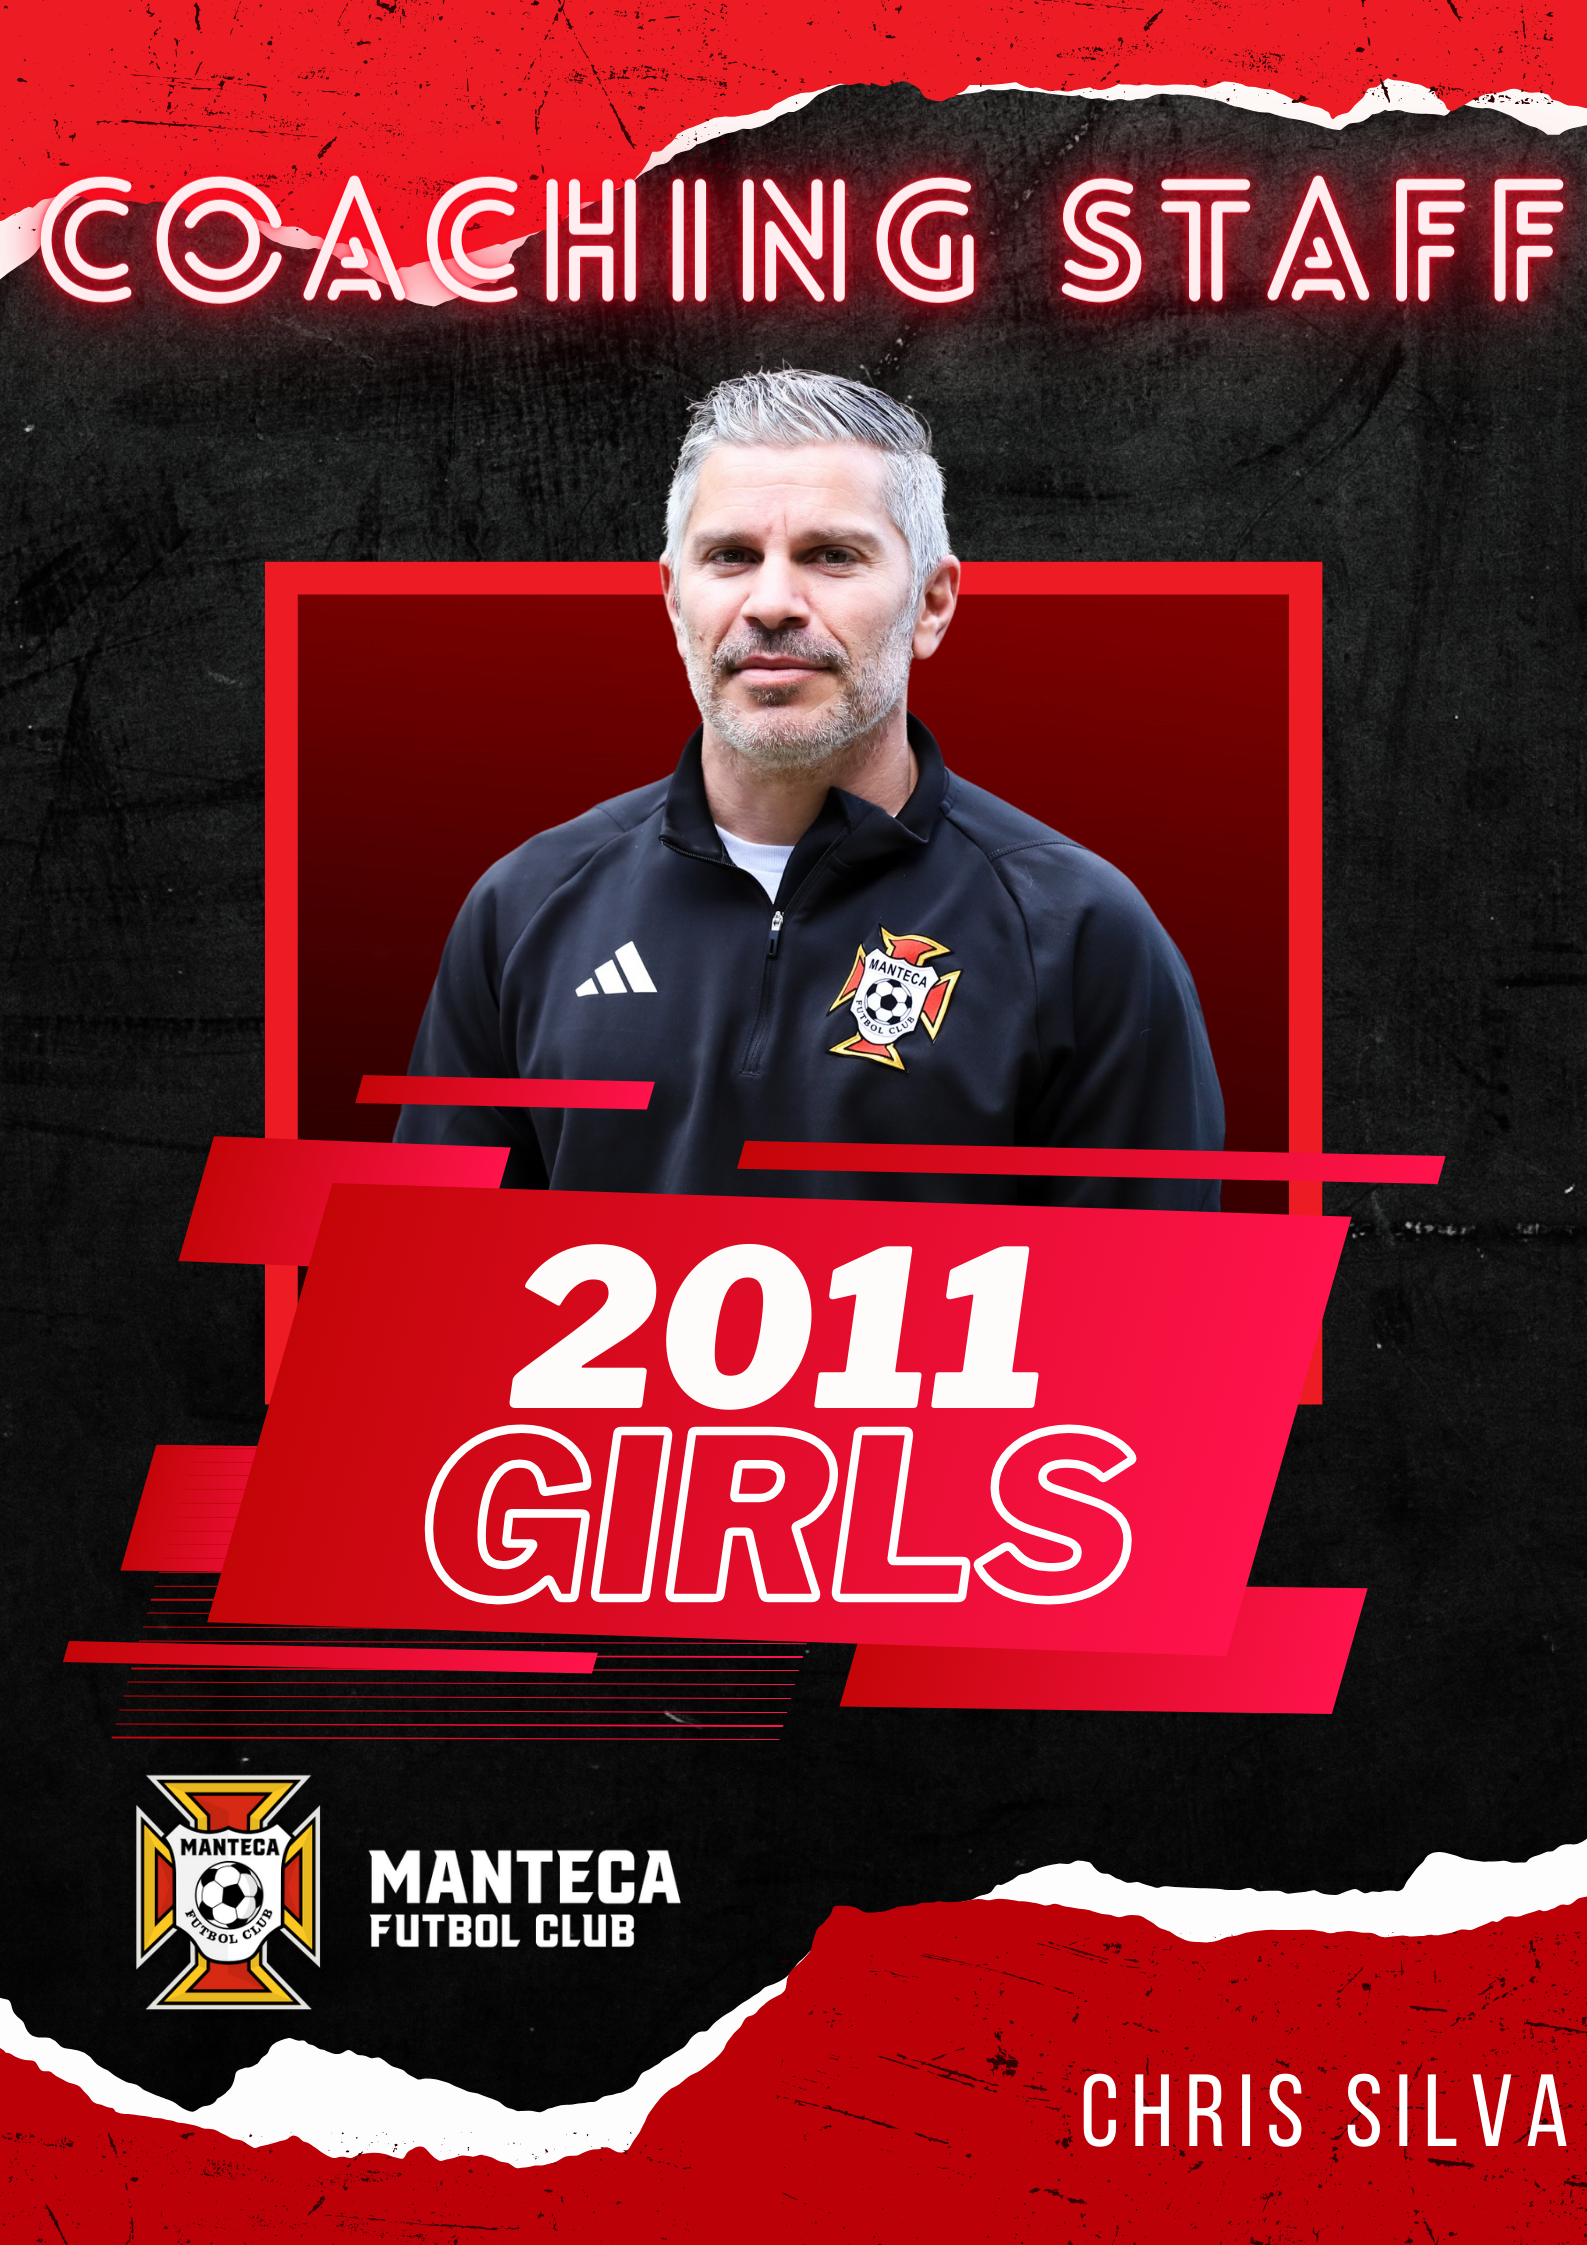 Manteca Futbol Club 11 Girls